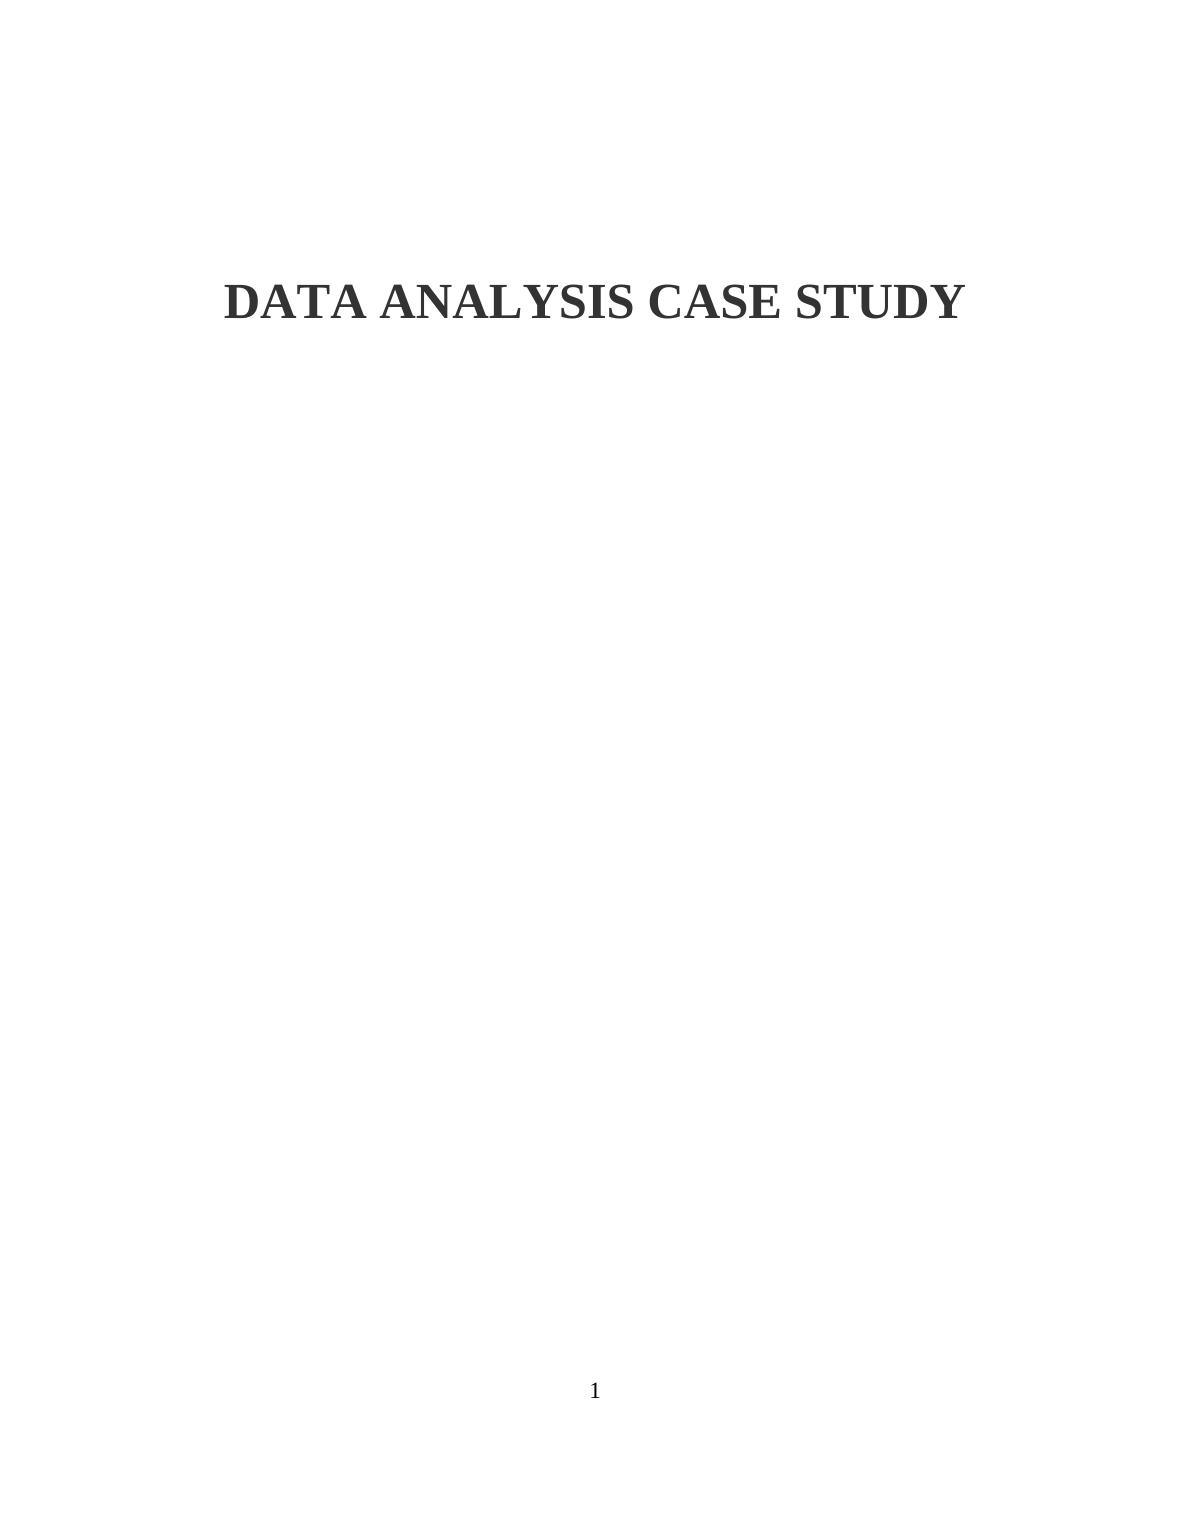 Data Analysis Case Study_1